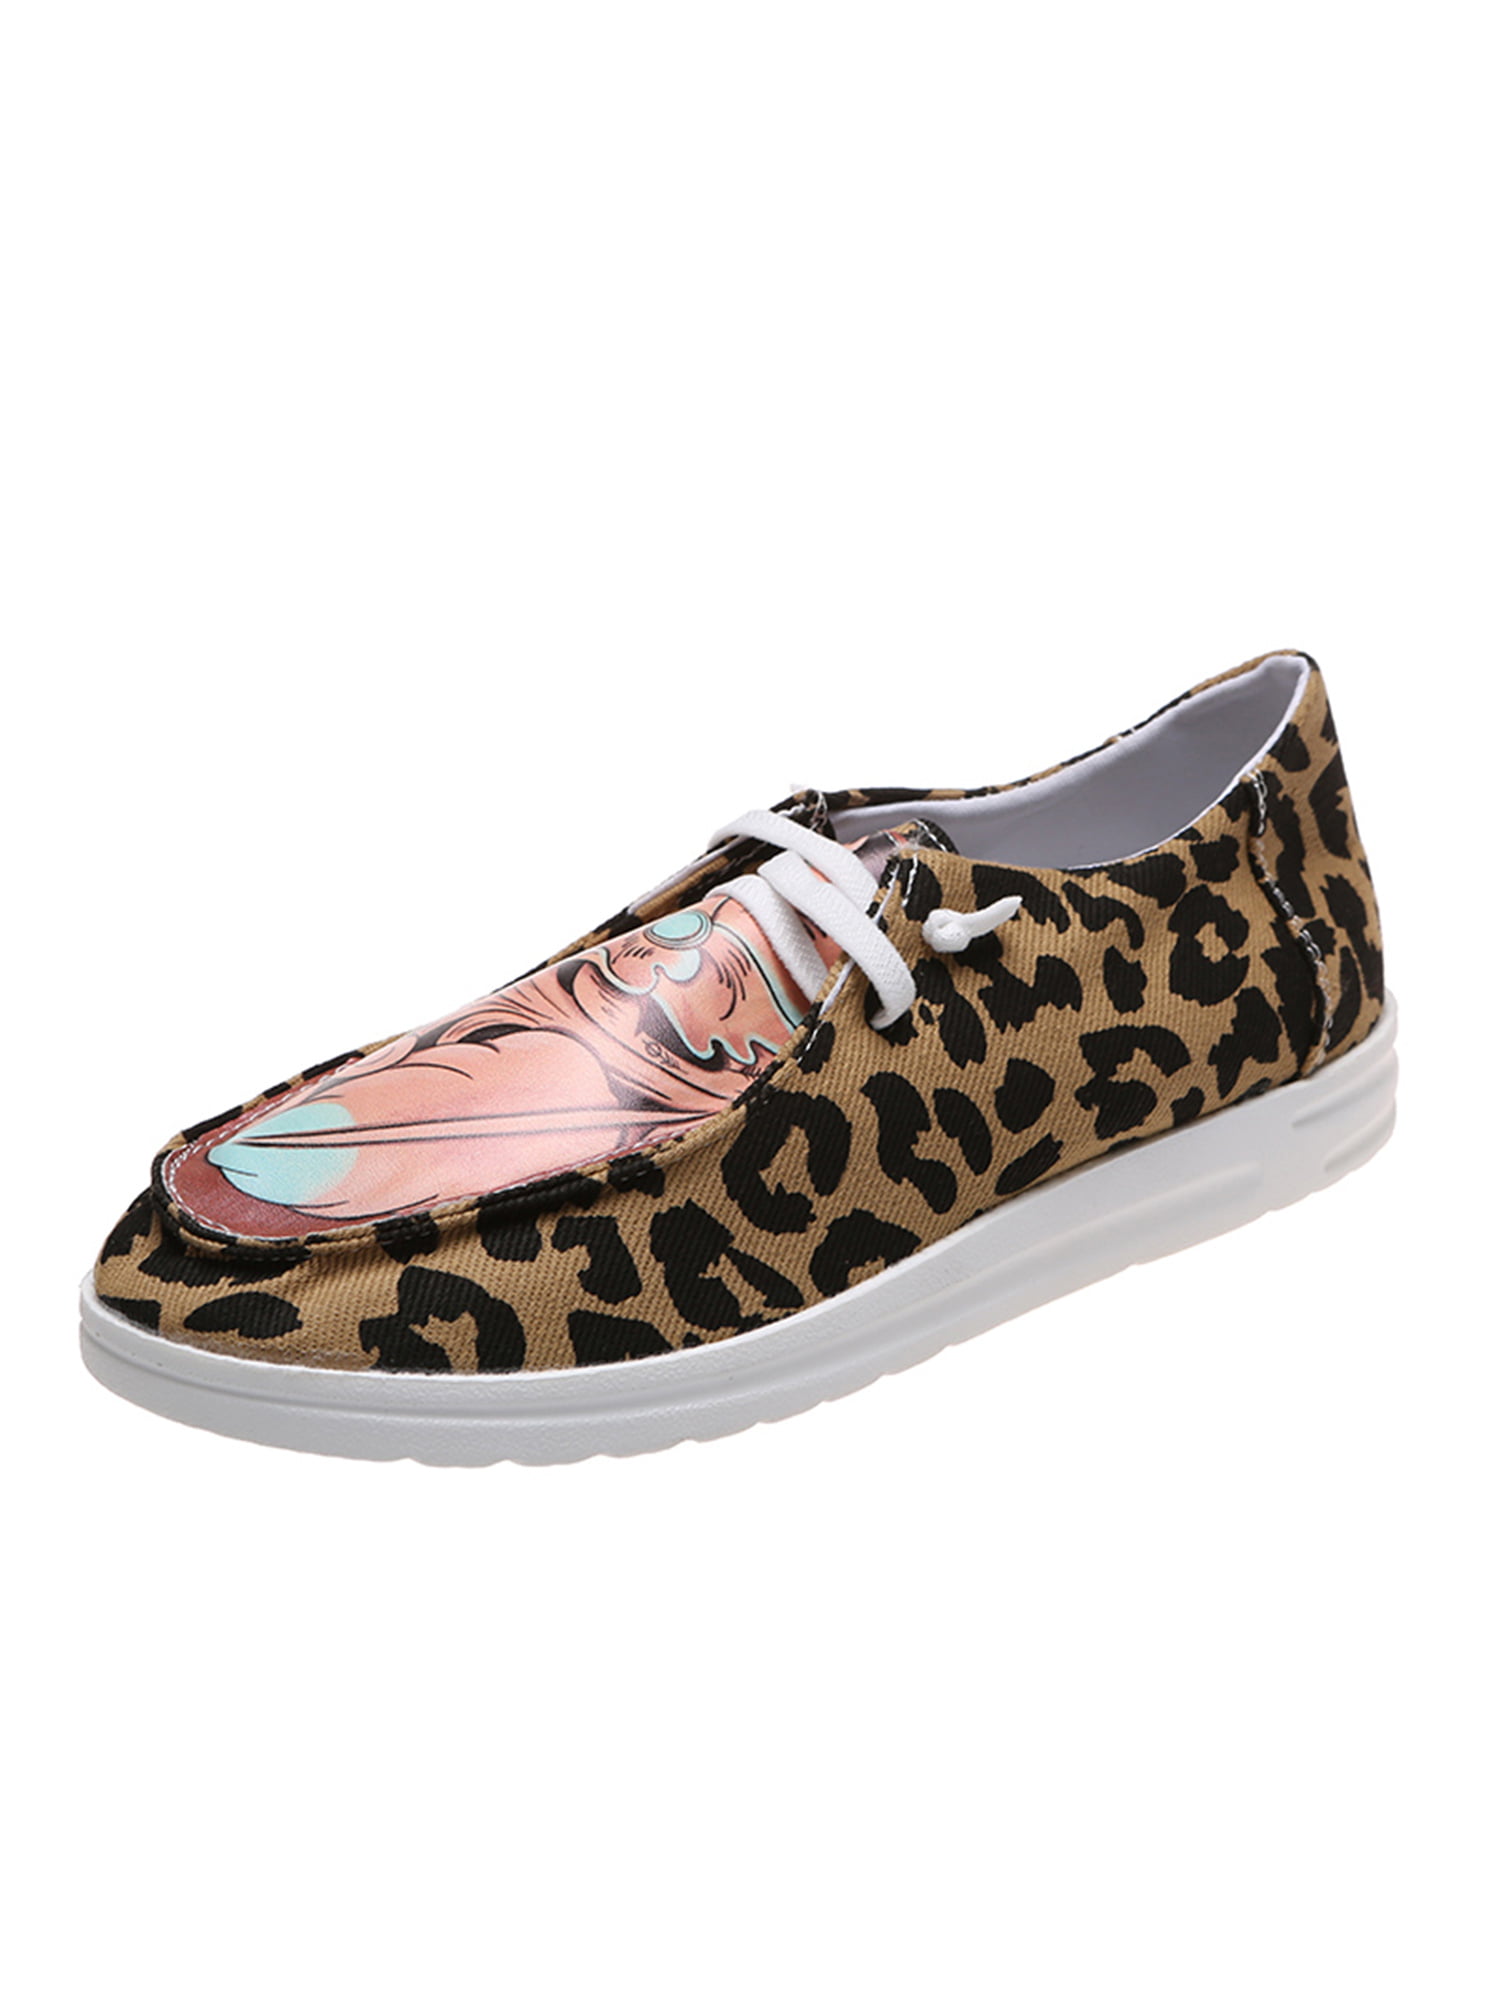 Colorful leopard print Women Canvas low top Skateboarding shoes 